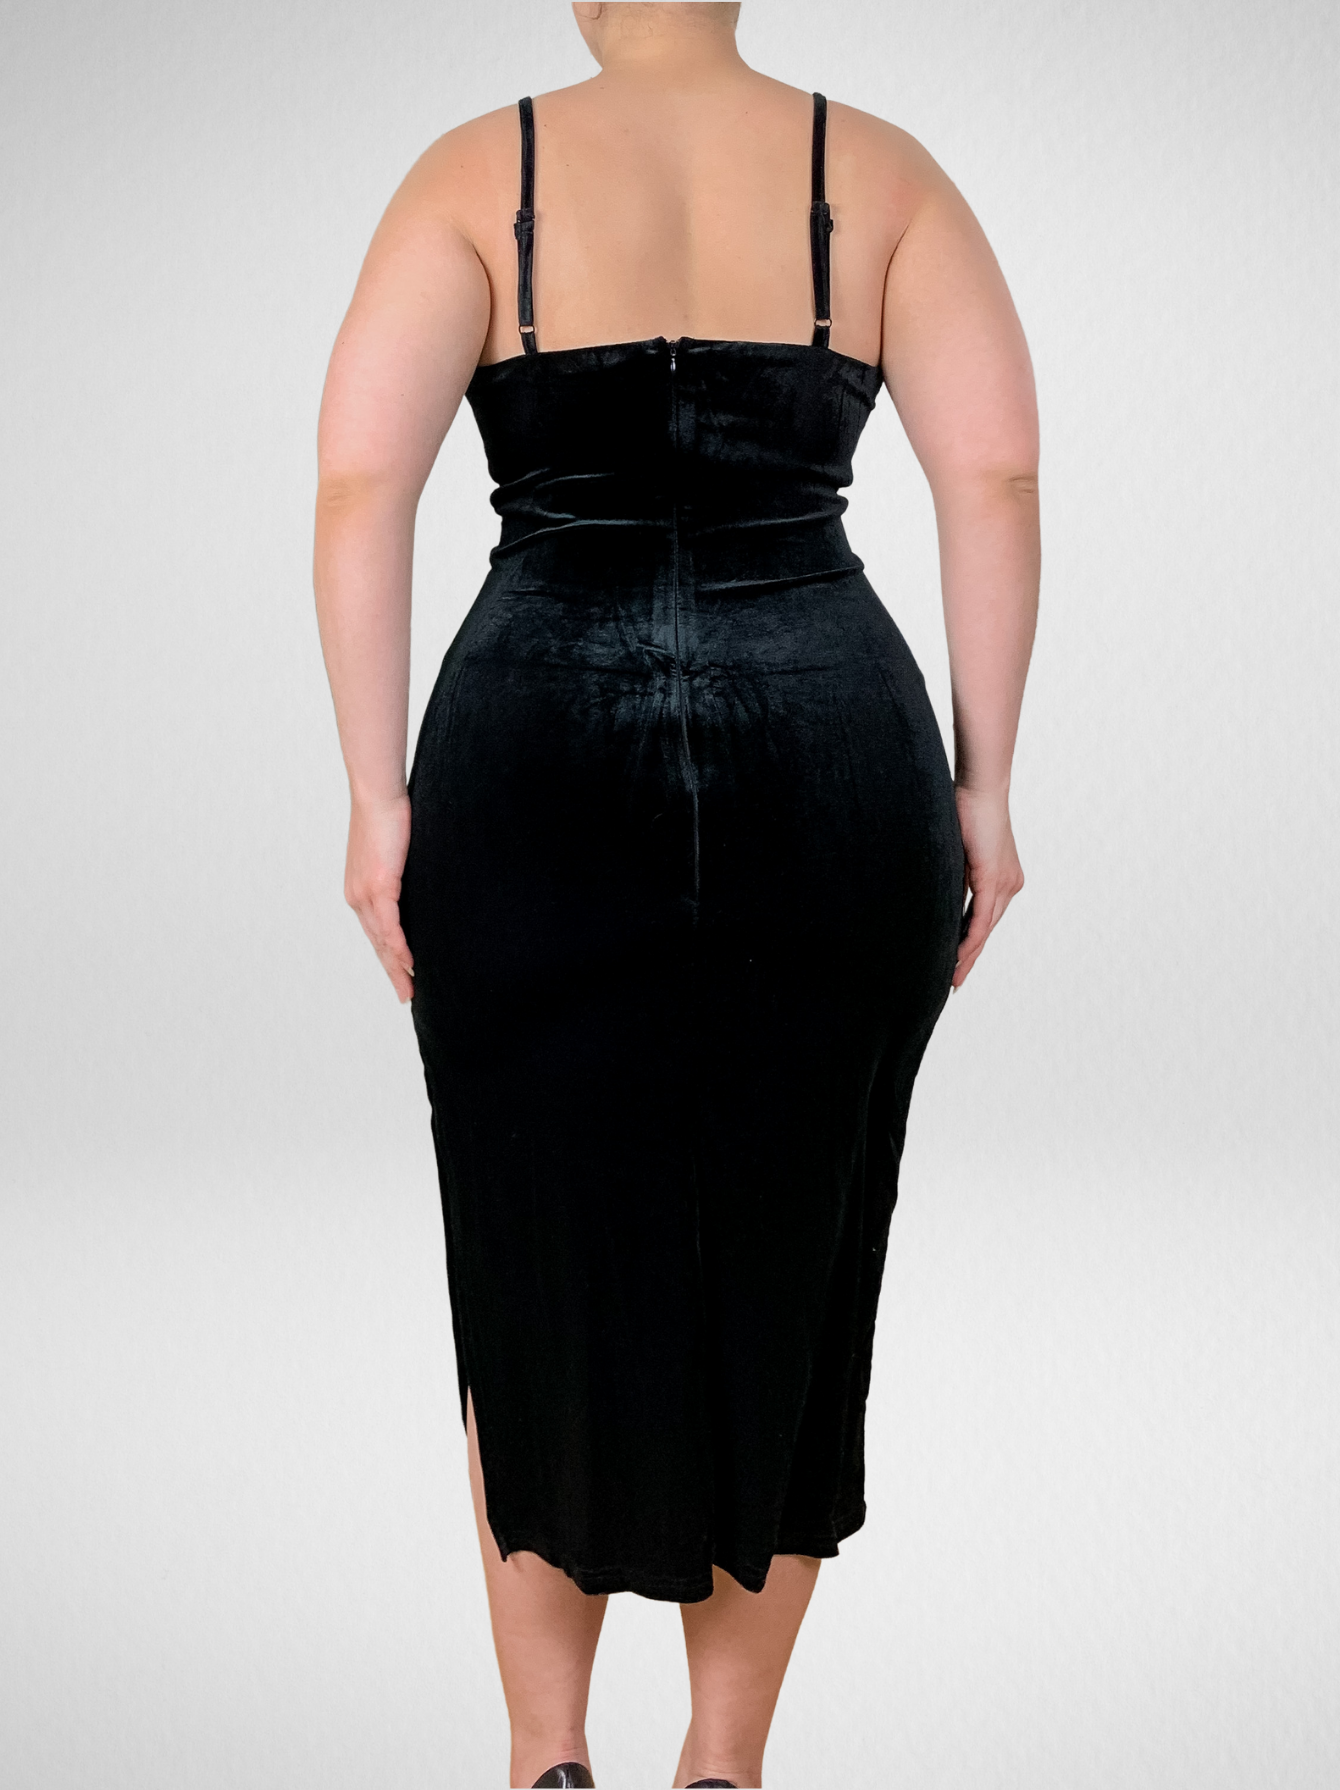 Classy Lady Black Velvet Midi Dress